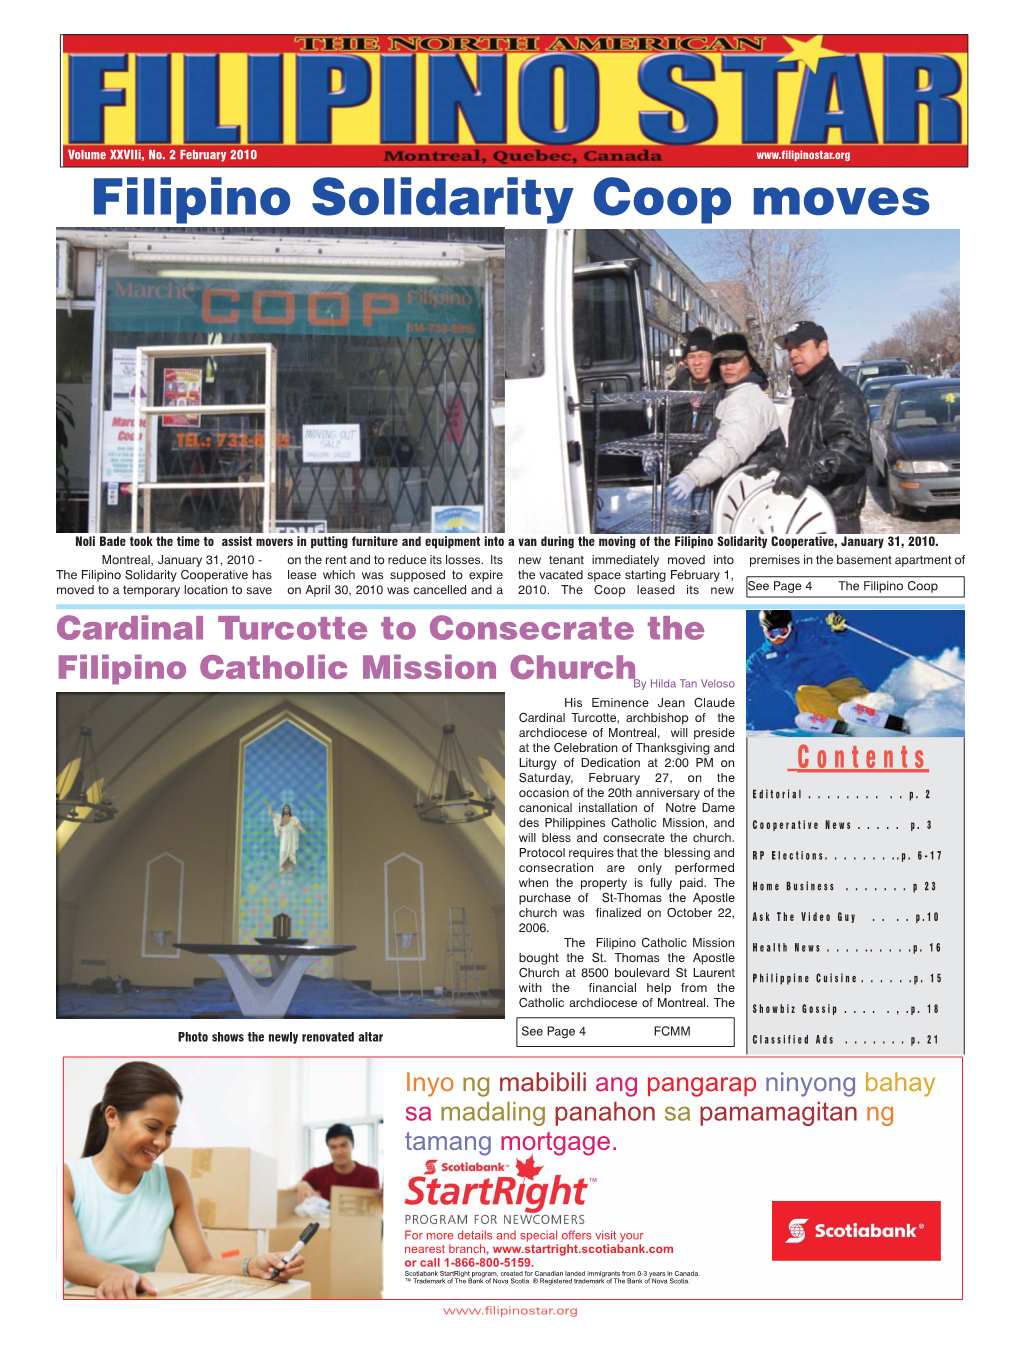 Filipino Star February 2010 Edition